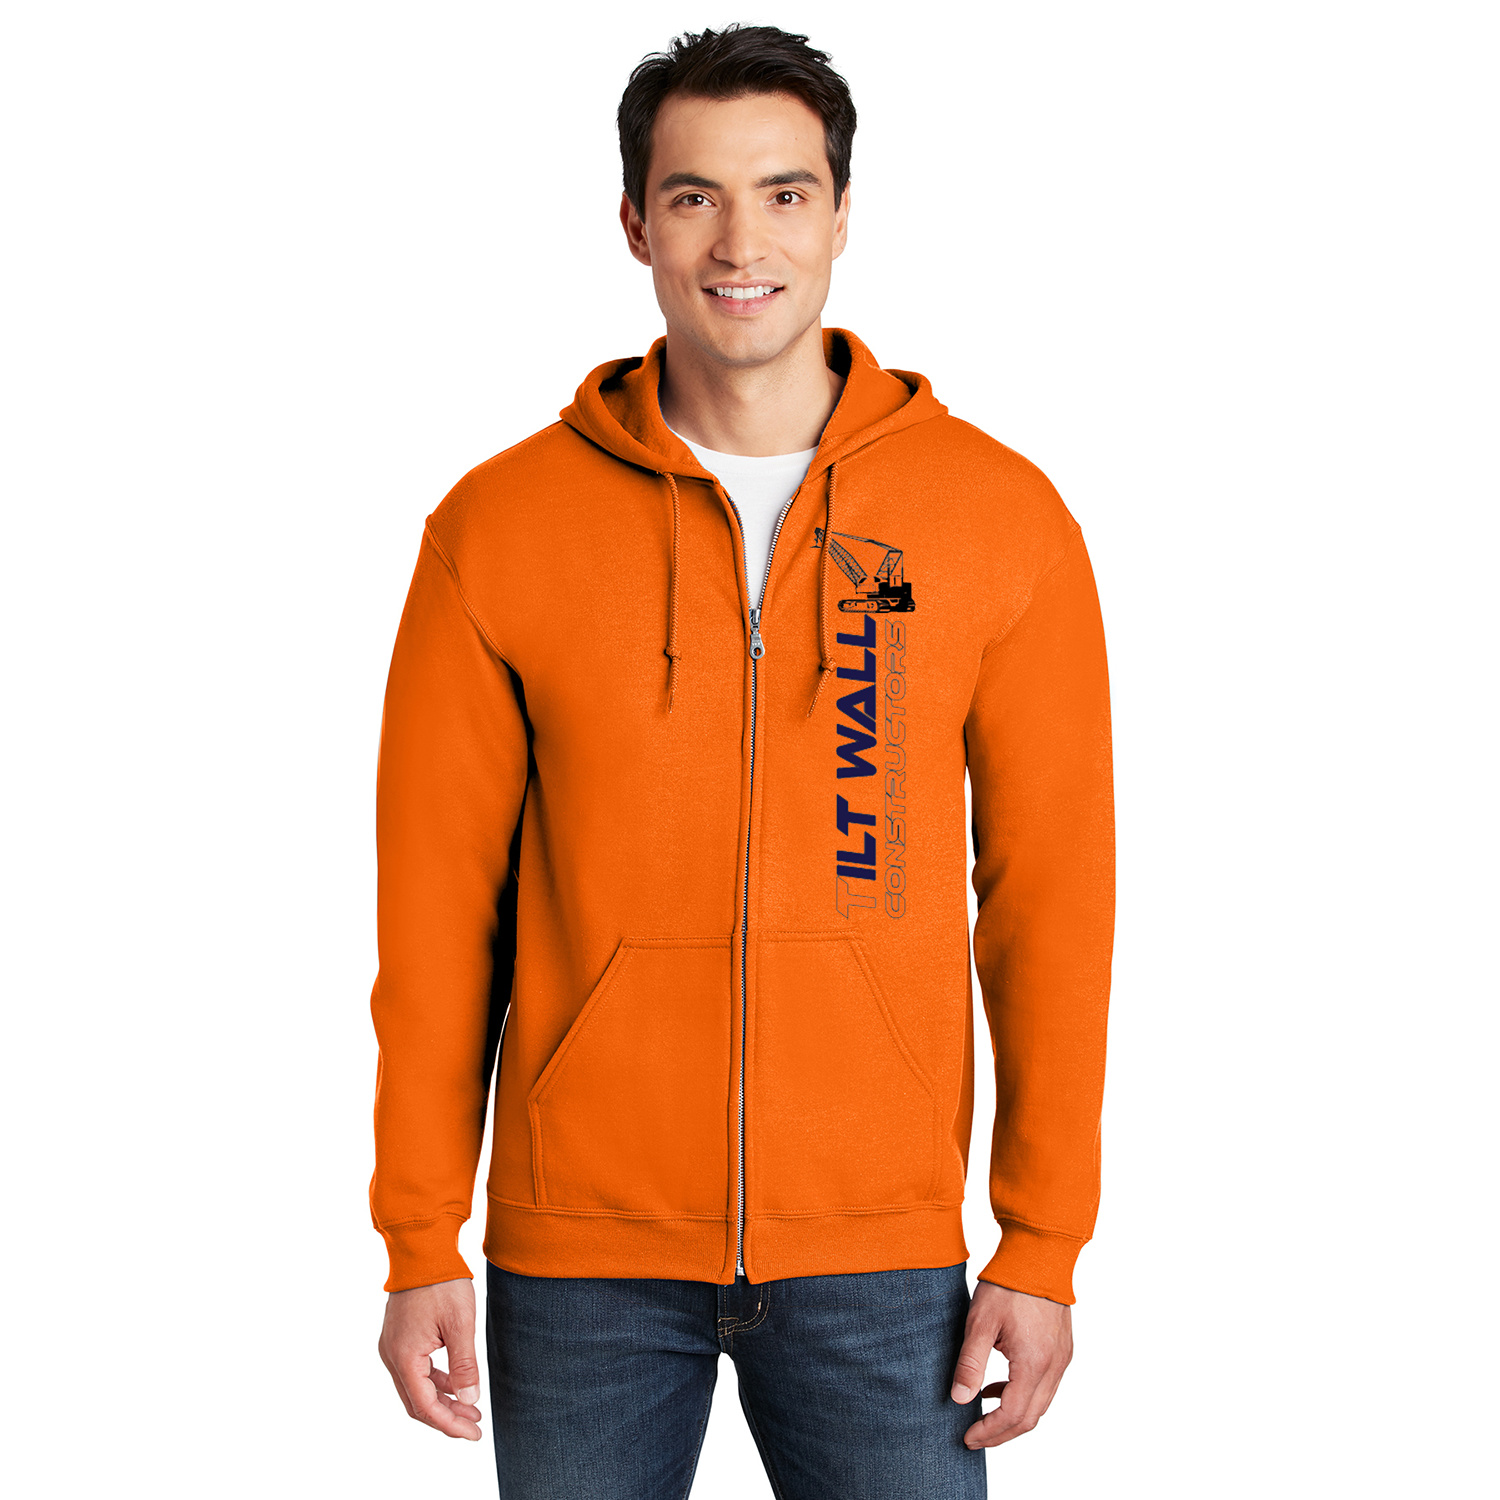 Wholesale Carhartt® Hooded Sweatshirt - Wine-n-Gear